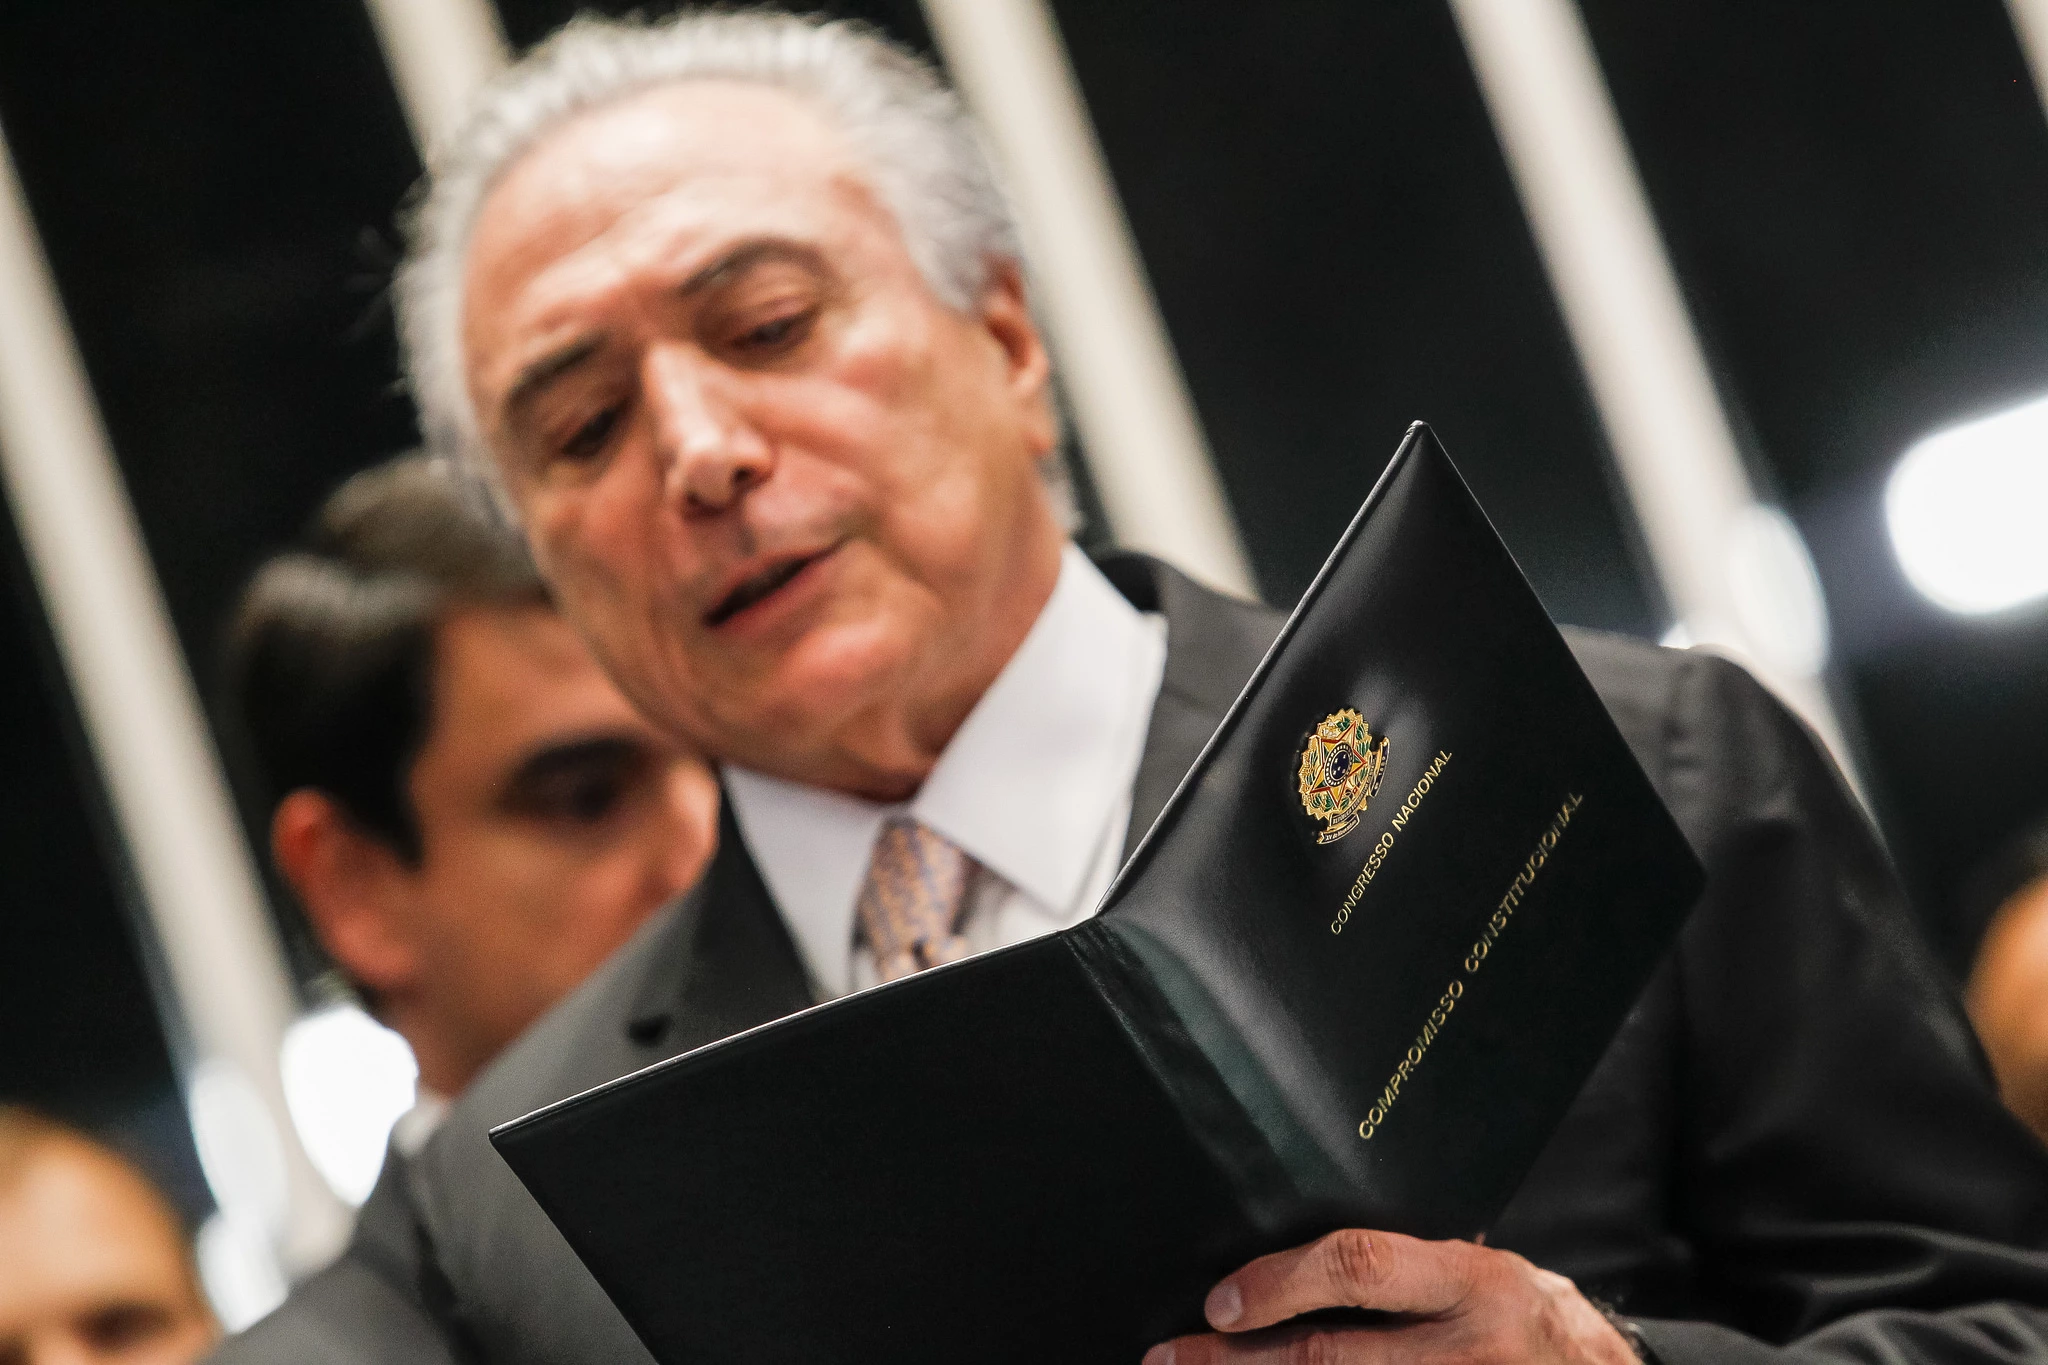 Presidente Michel Temer durante sua posse no Senado Federal.(Brasília - DF, 31/08/2016)Foto: Beto Barata/PR